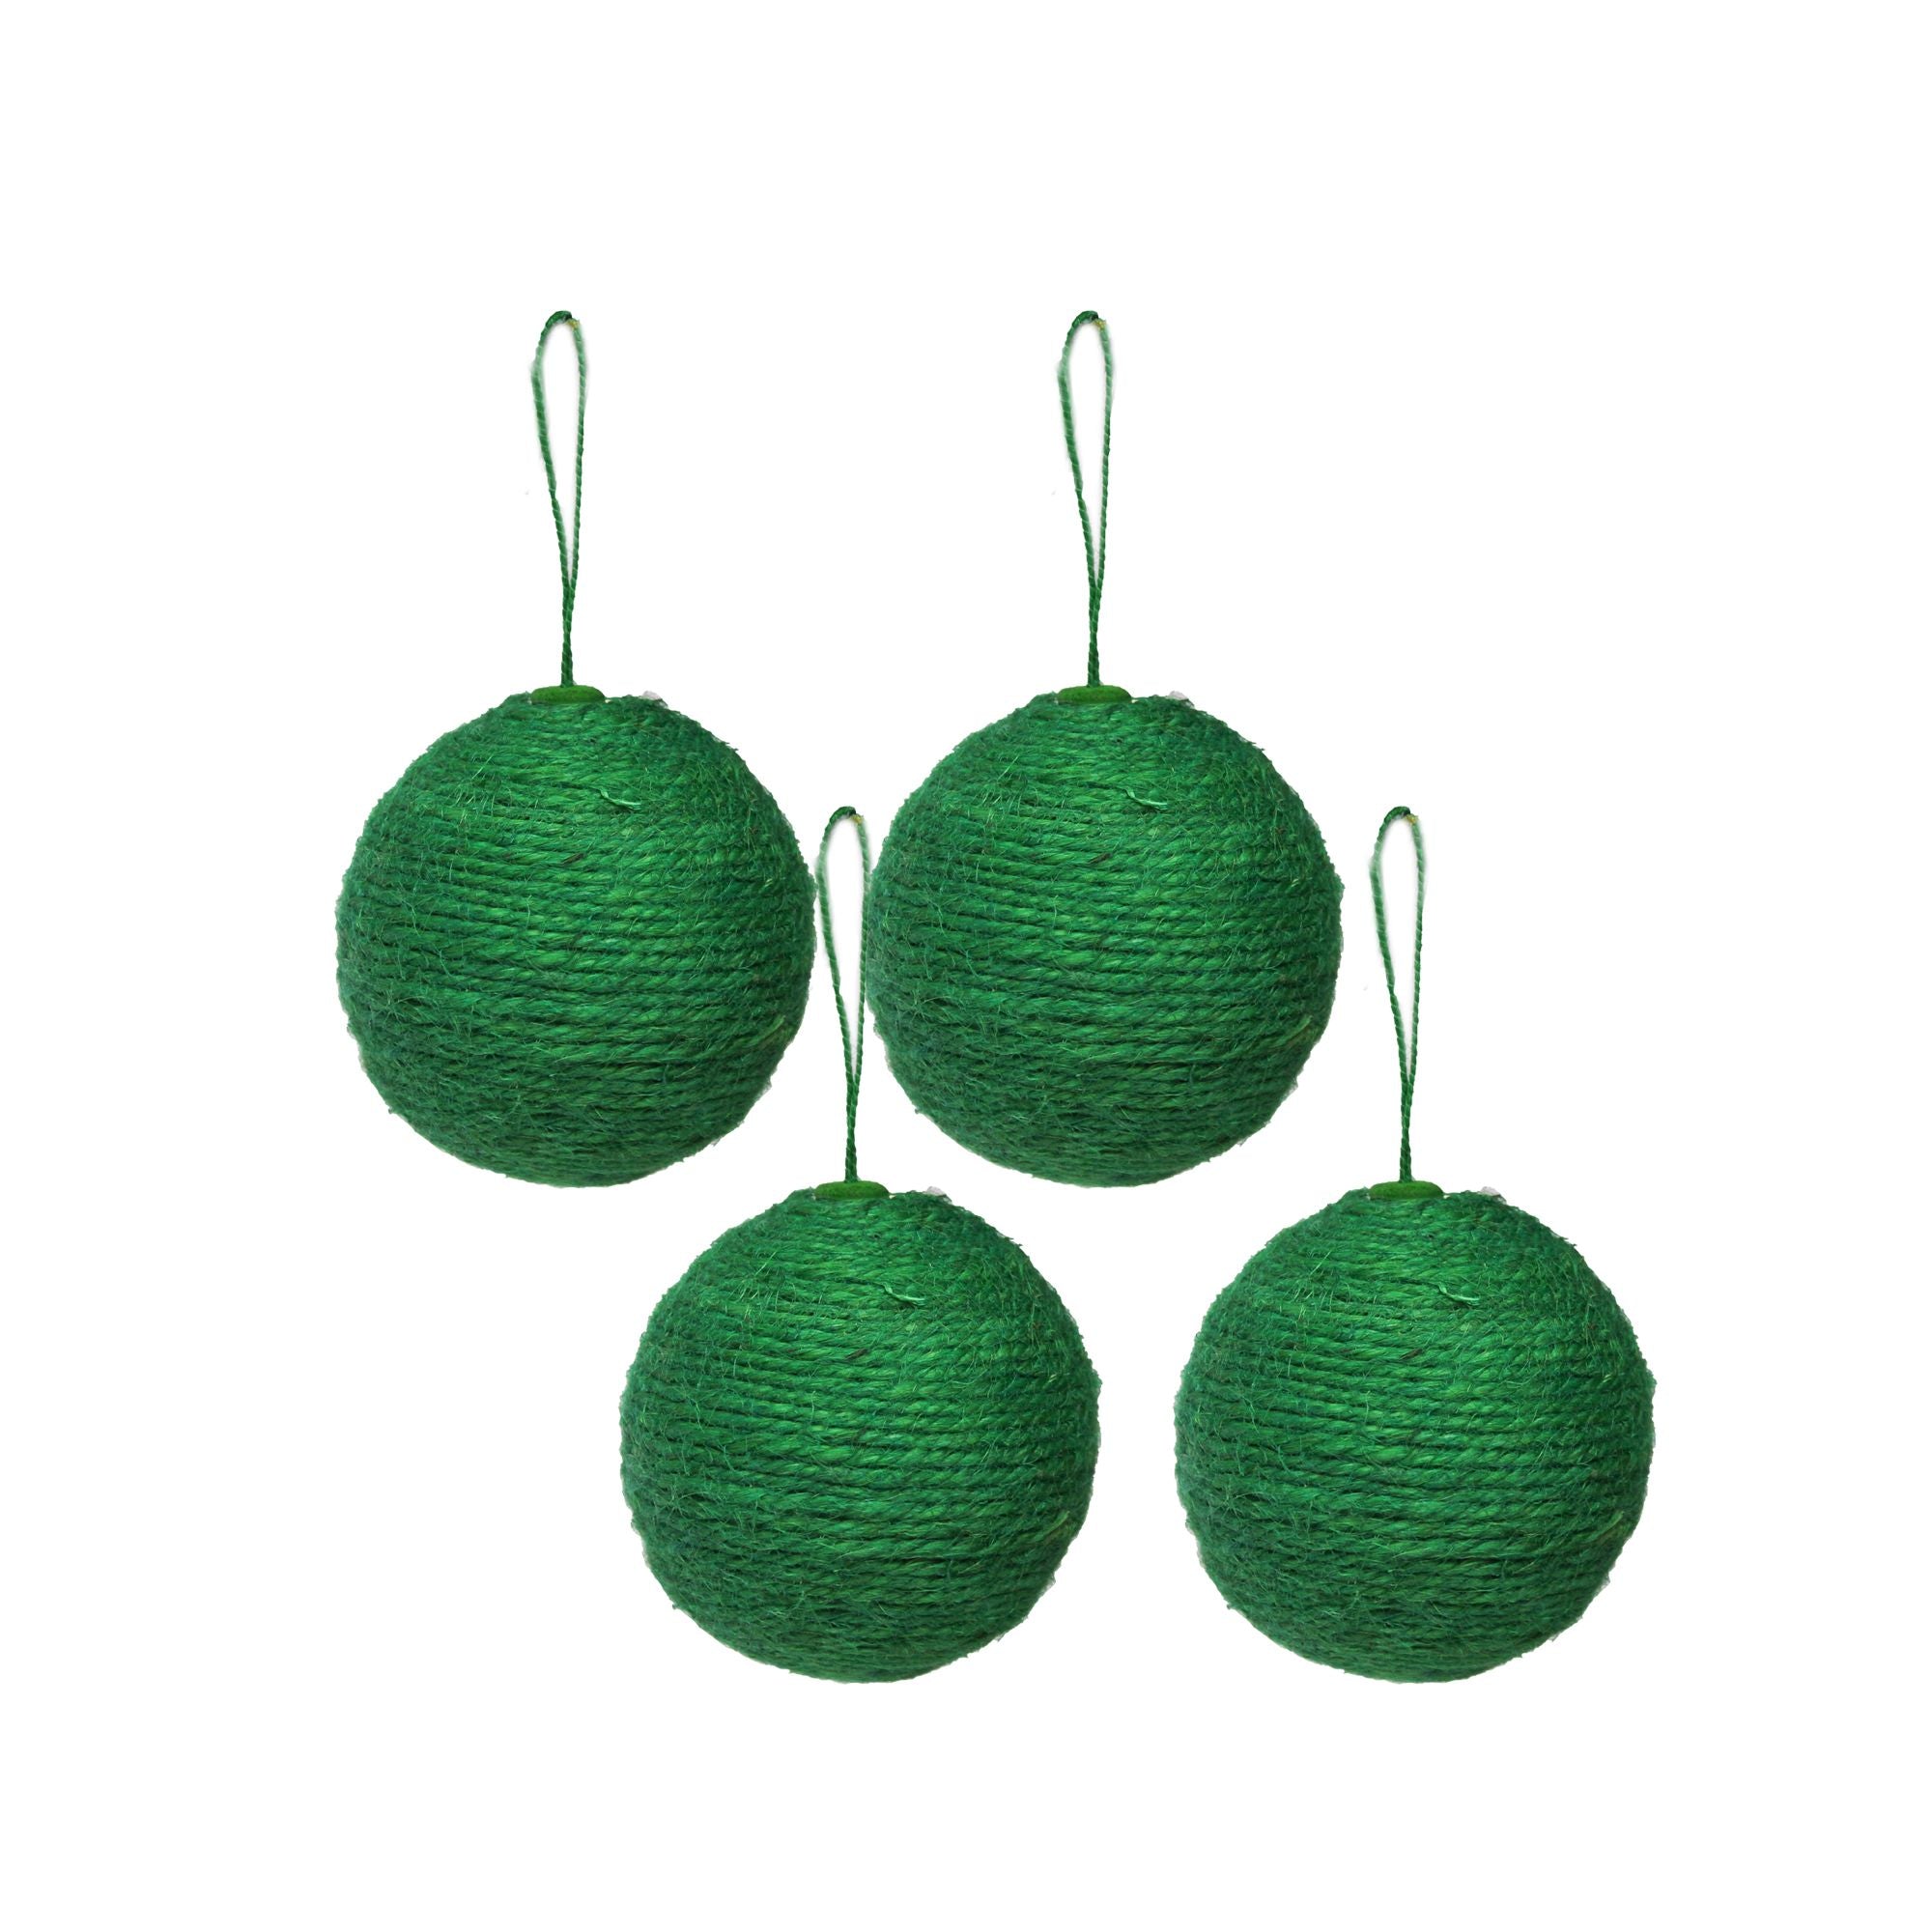 Handmade Christmas Ornaments -Jute Baubles, 50mm Green, 4pc